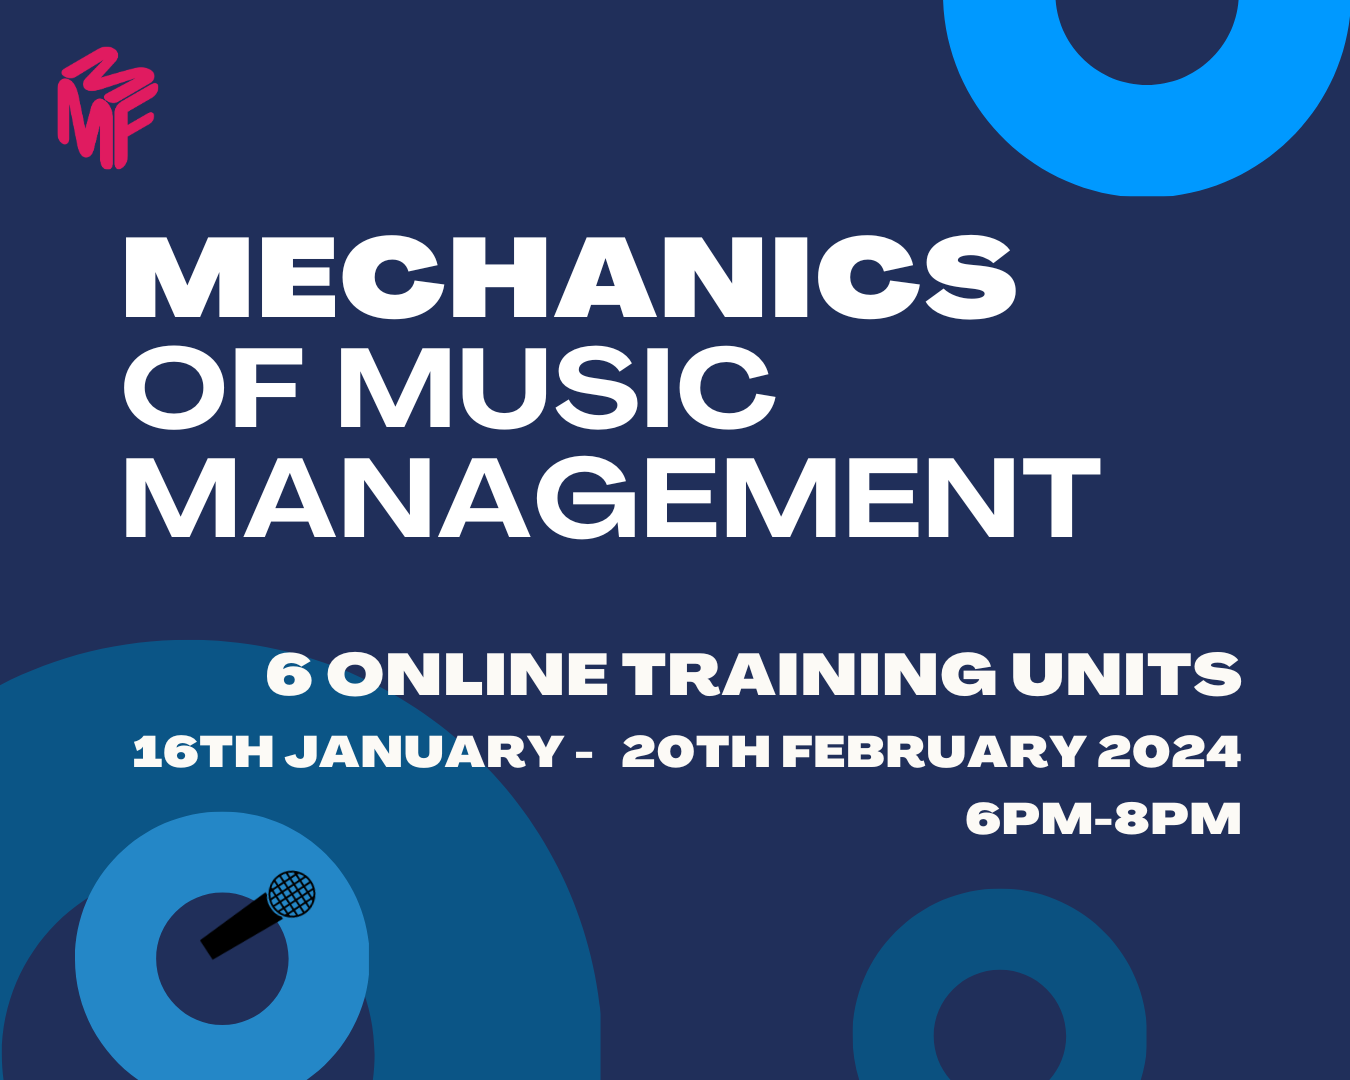 Mechanics of Music Management Online Training